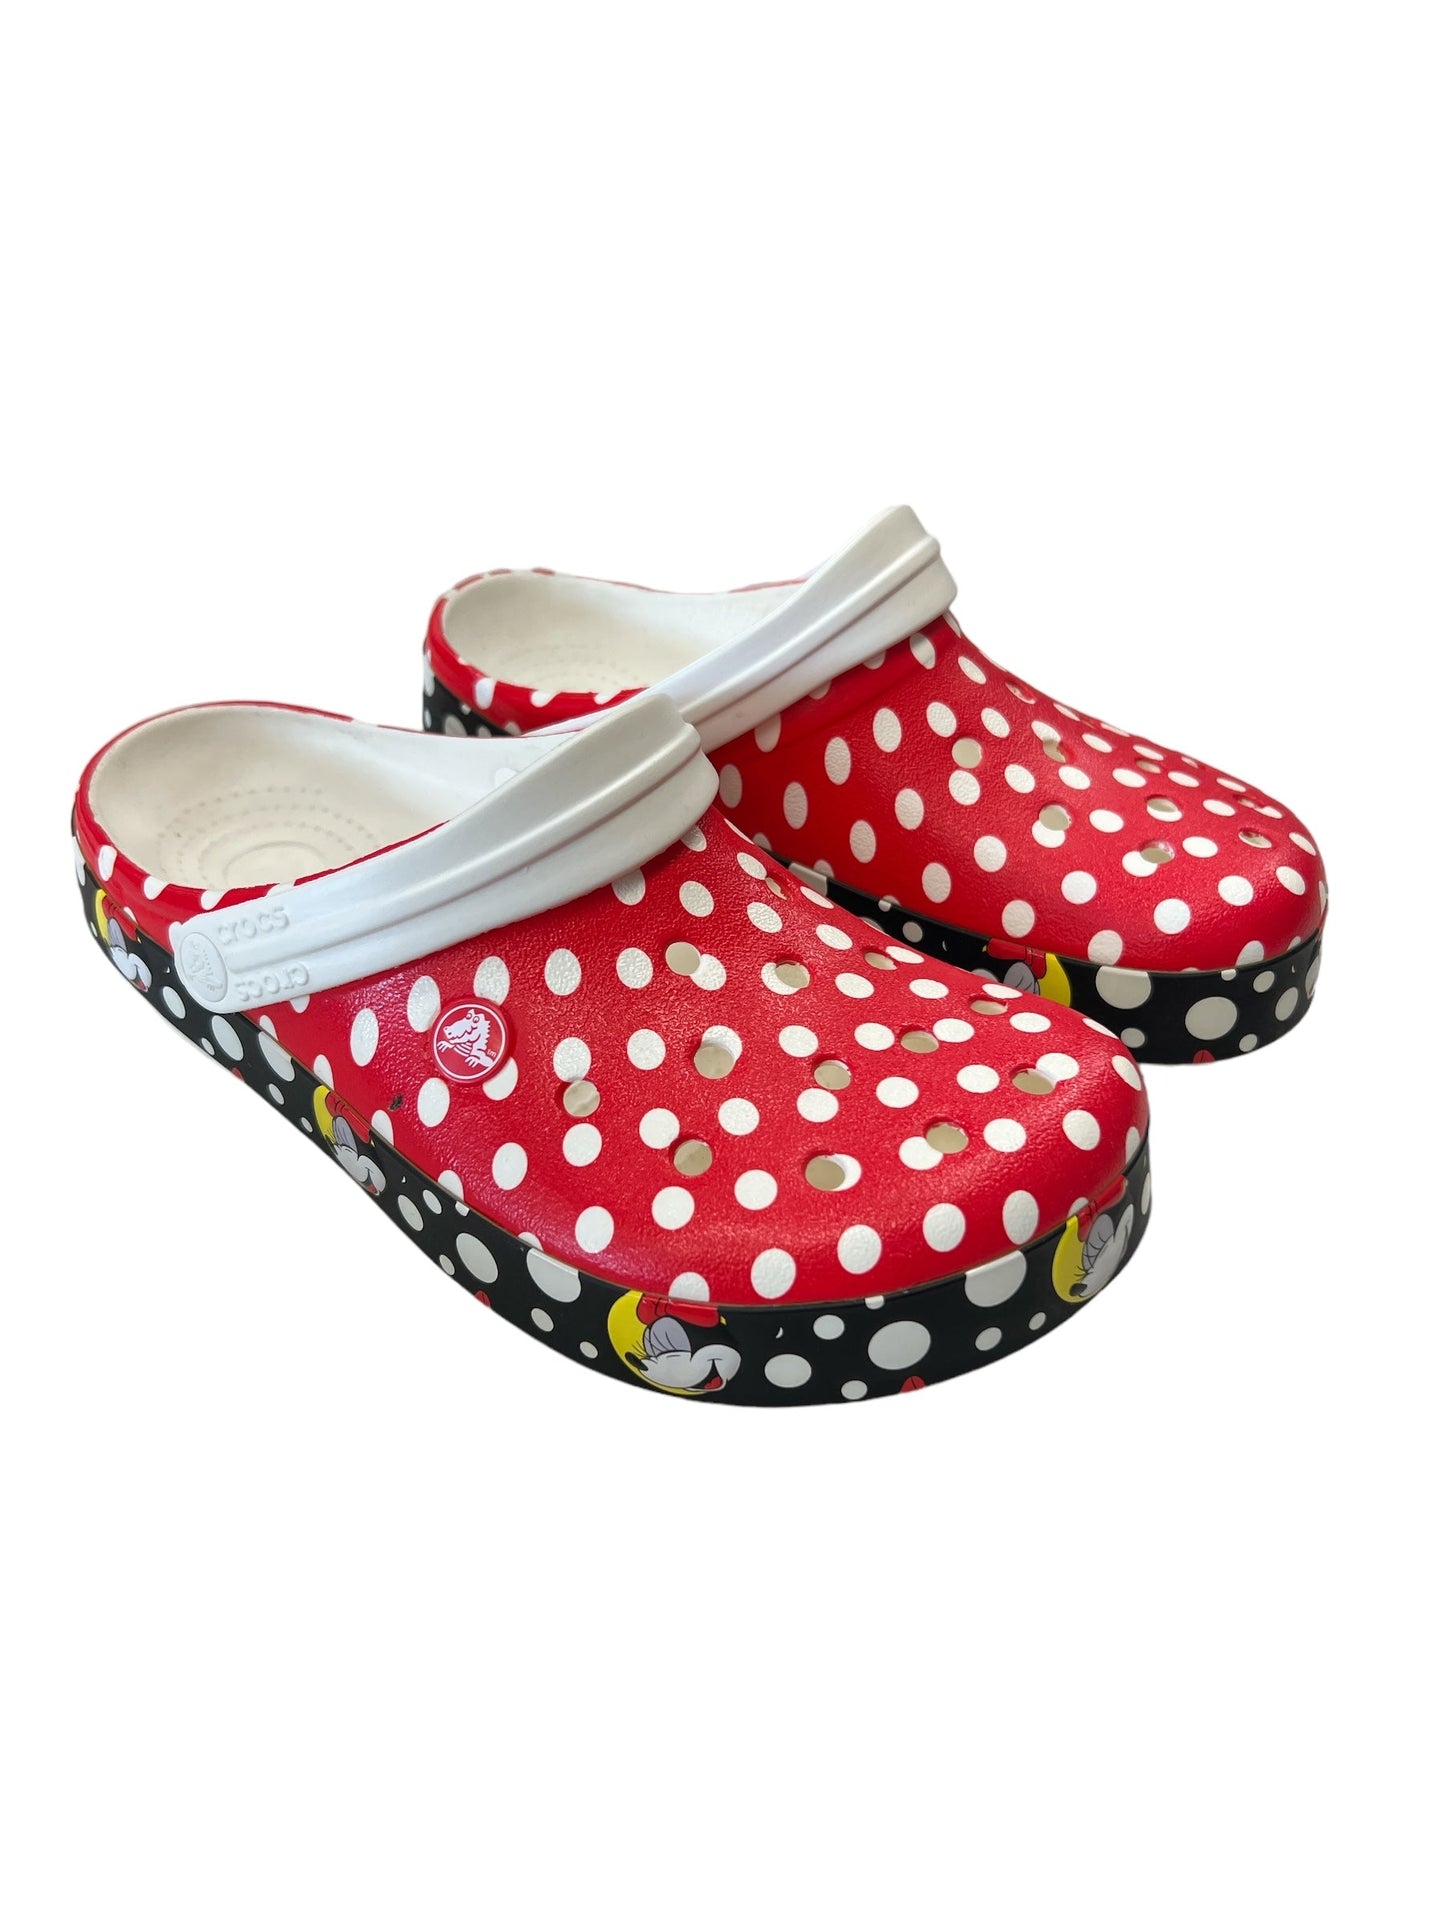 Red Shoes Flats Crocs, Size 8